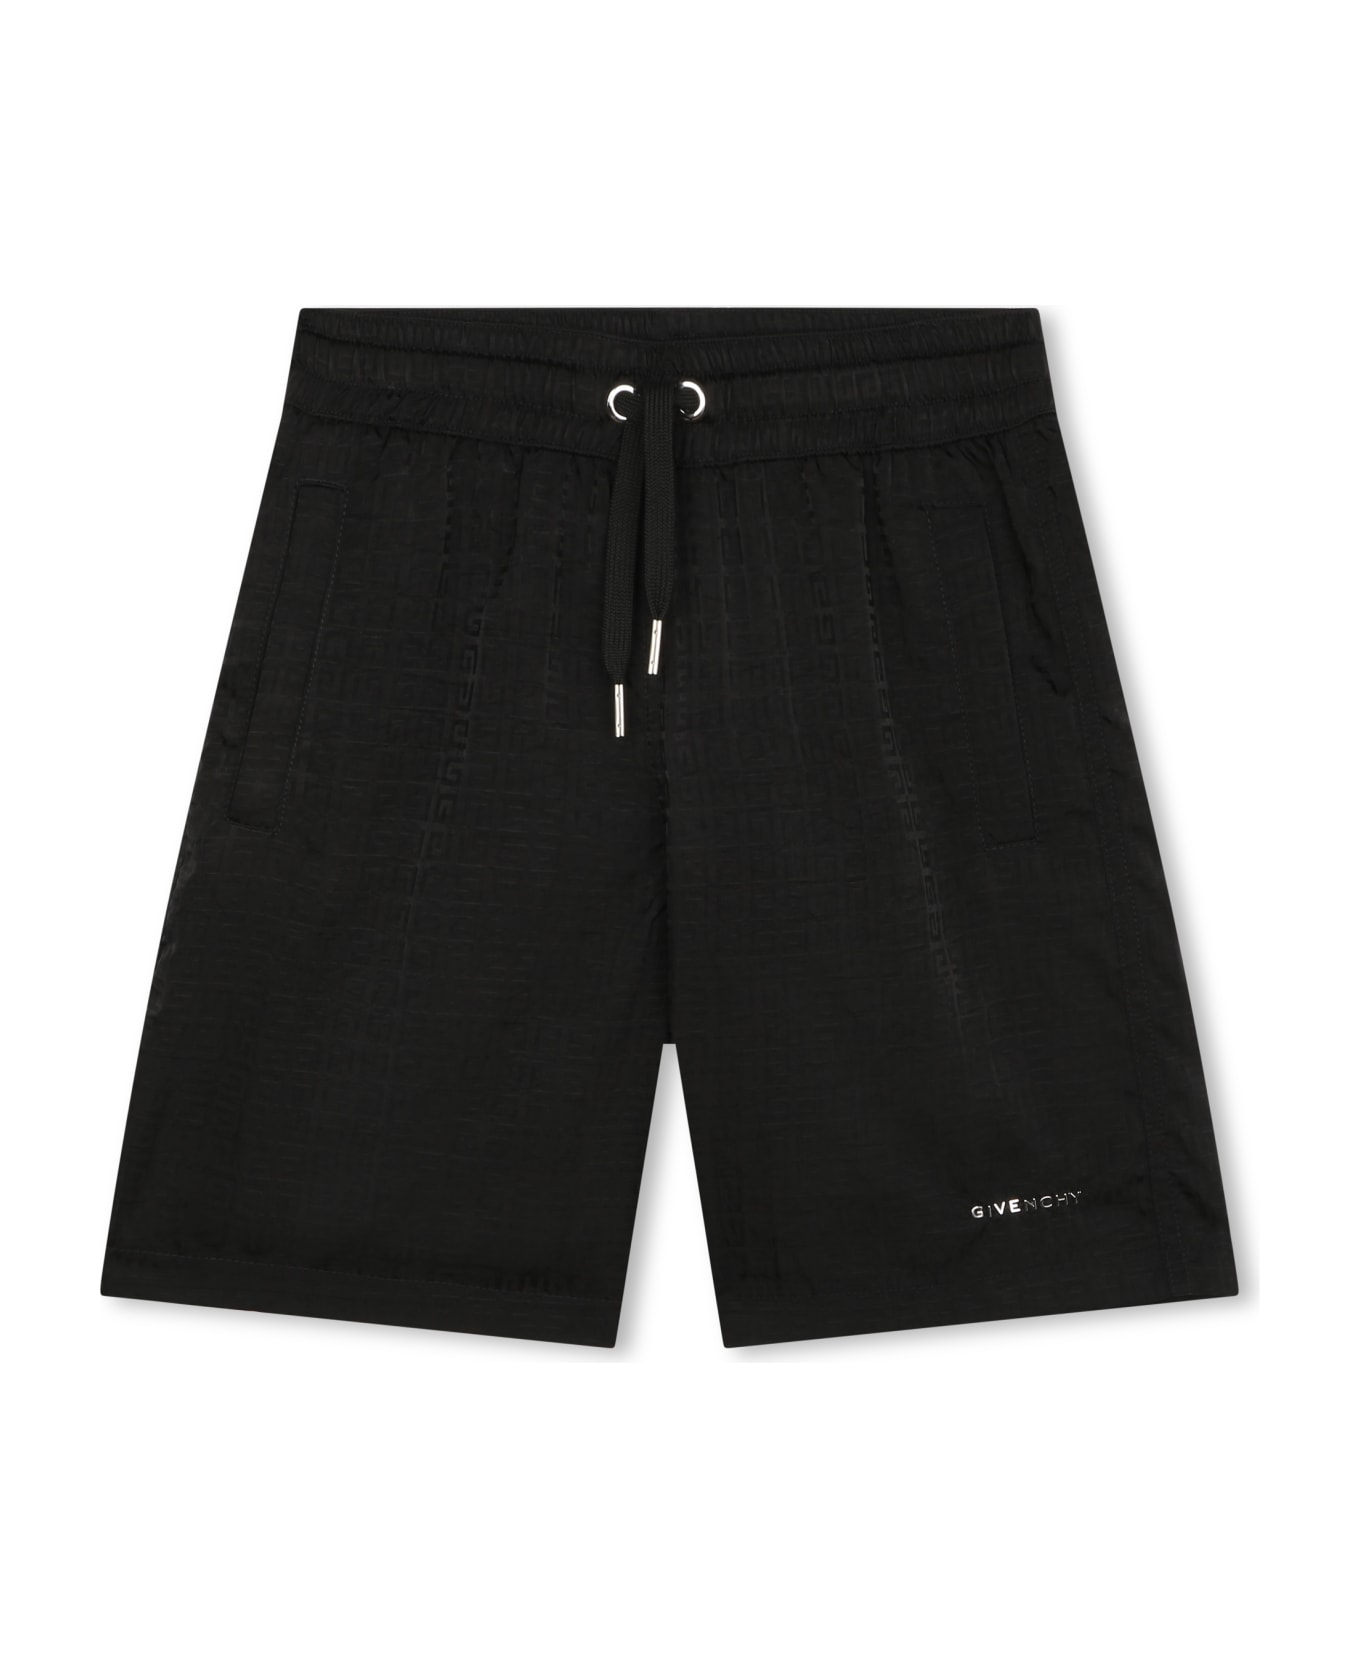 Givenchy Sports Shorts With Monogram - Black ボトムス